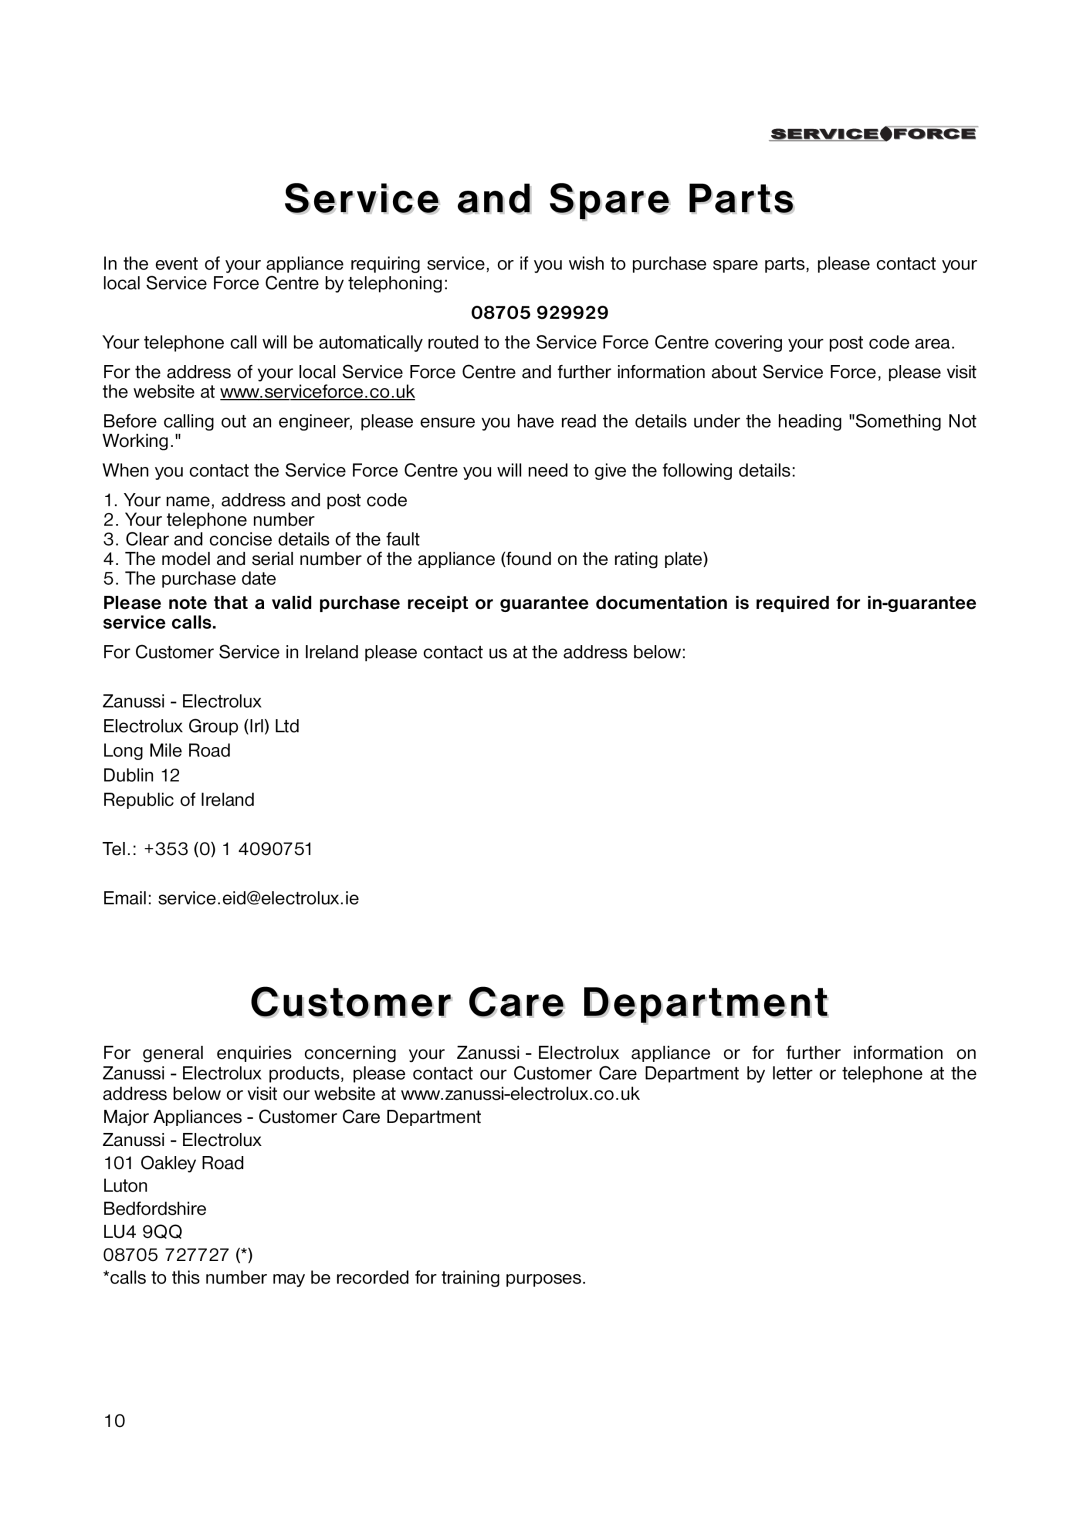 Zanussi ZRT 6656 manual Service and Spare Parts, Customer Care Department, 08705 